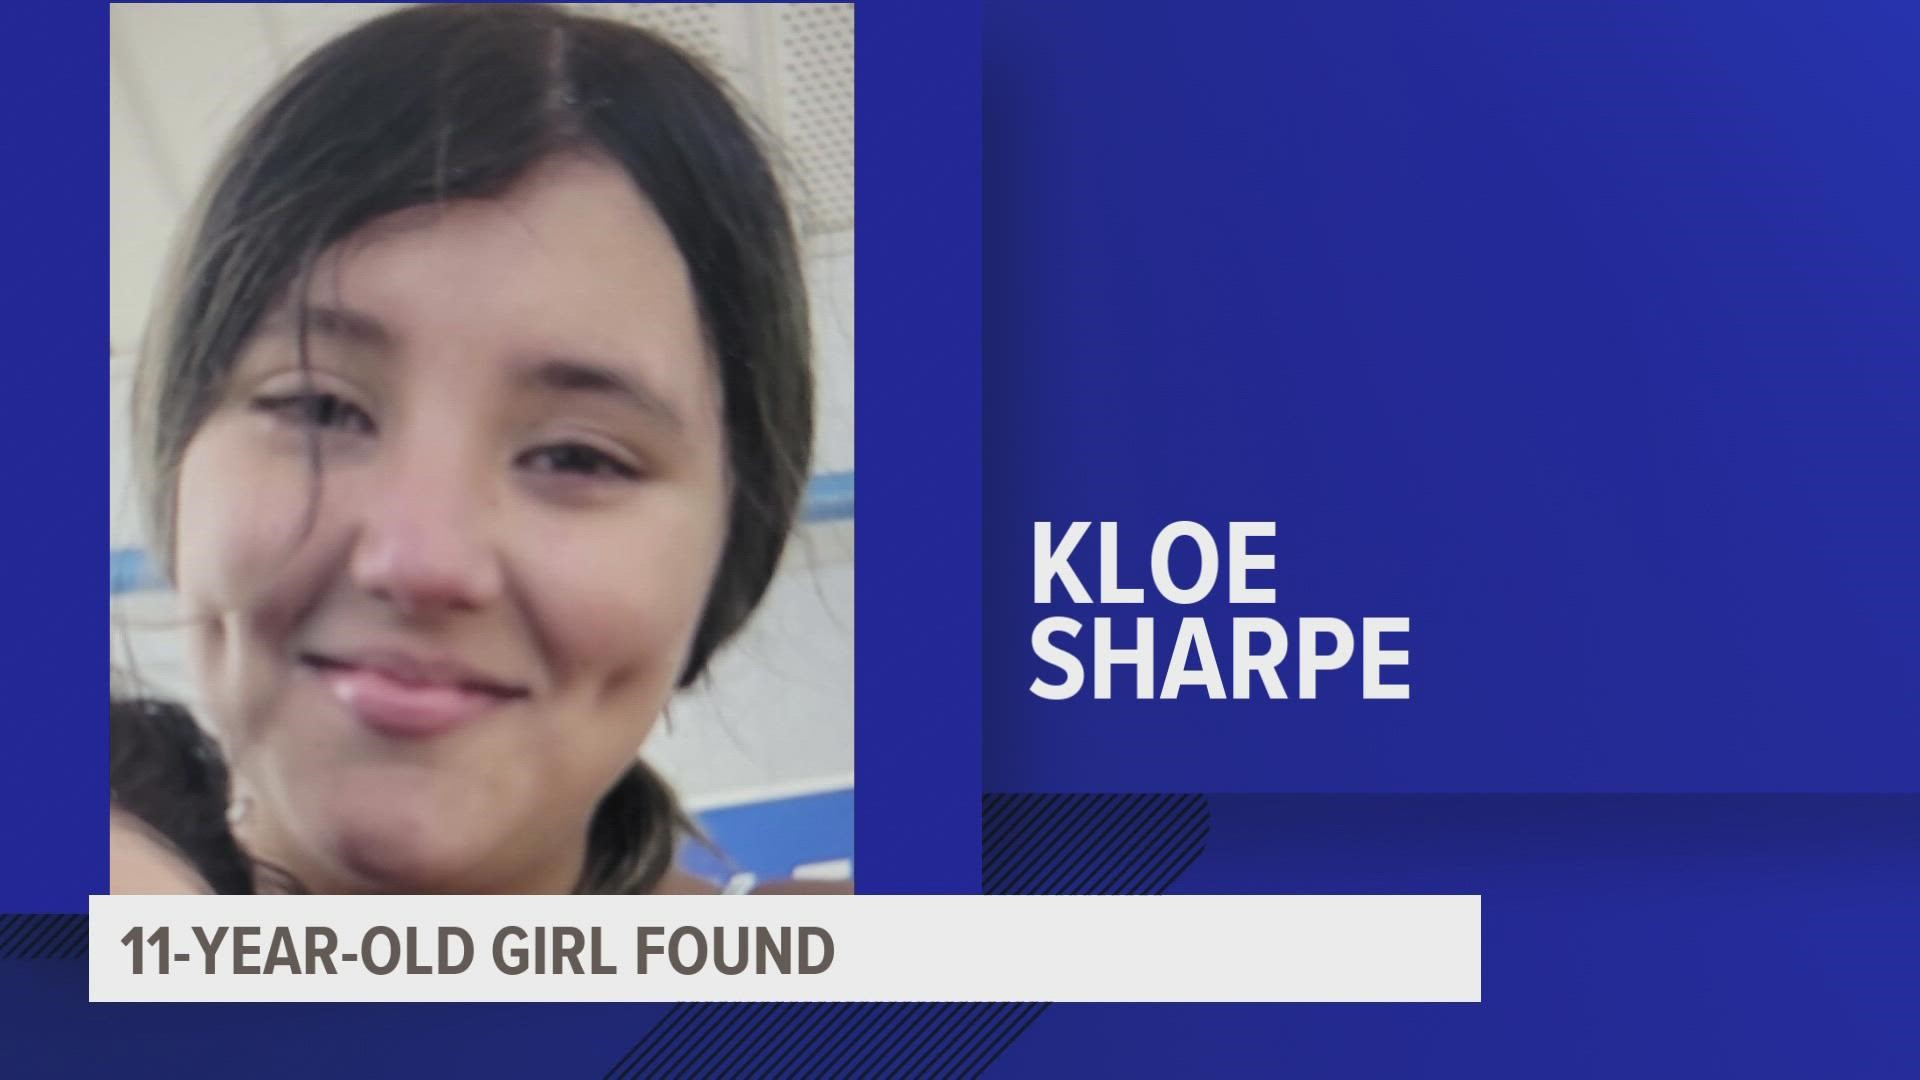 Kloe Sharpe was reported missing around 2 p.m. and found around 10 p.m., according to police.